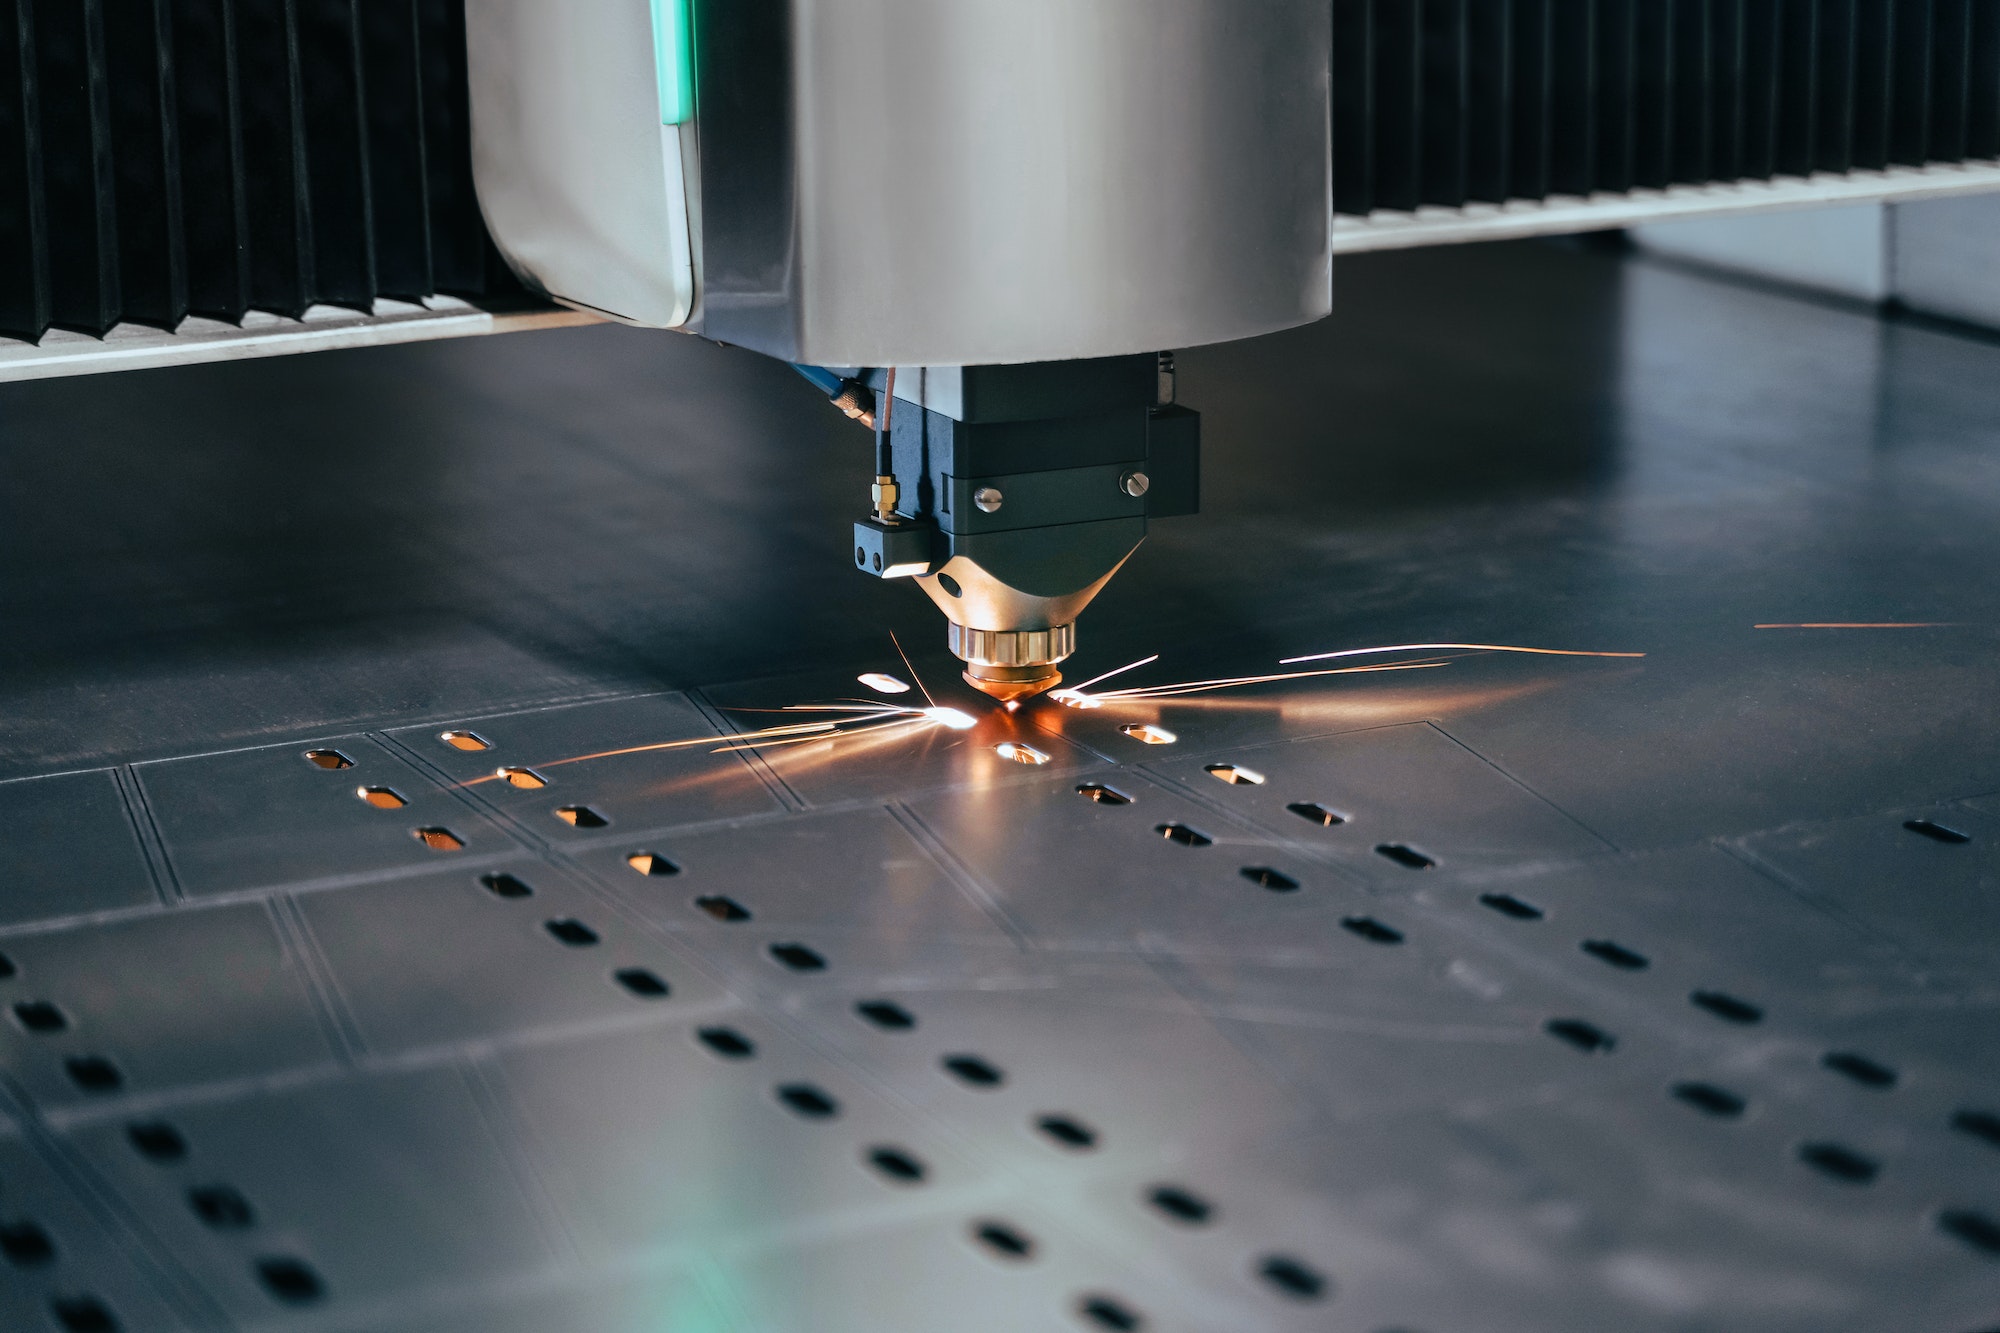 laser cutting mashine CNC with flying sparks